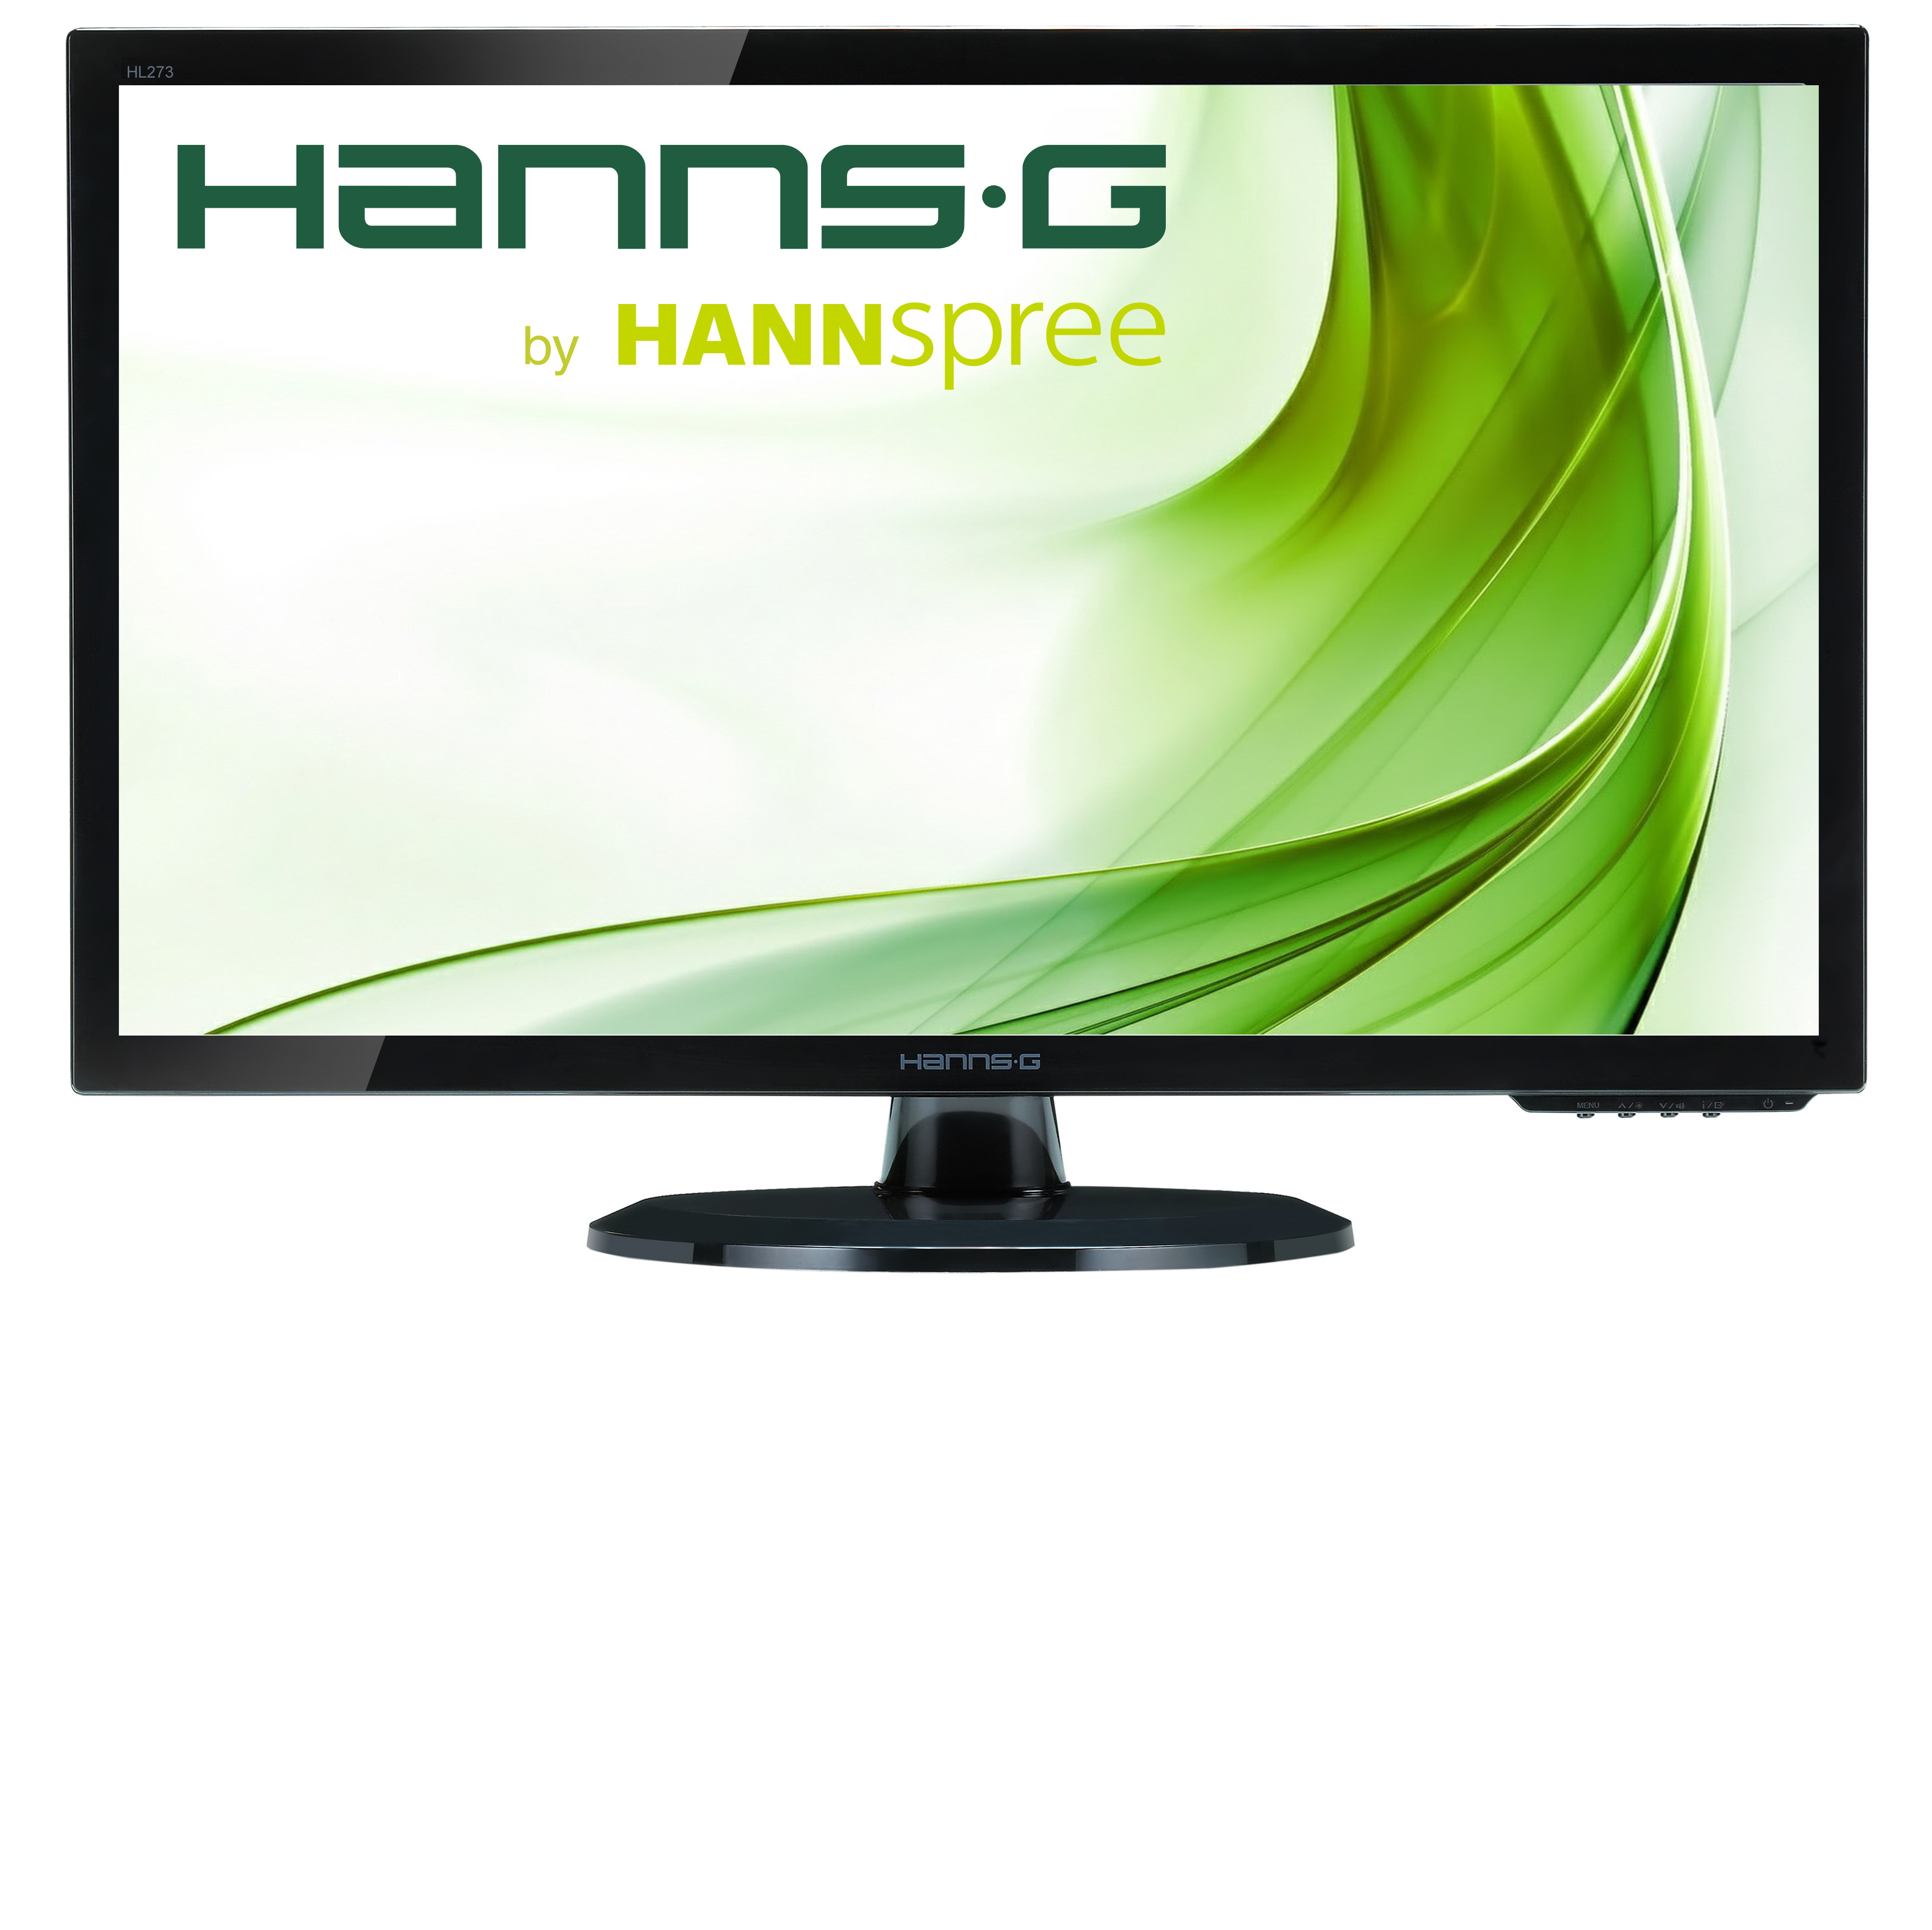 Hannspree Hanns.G HL 274 HPB Plus